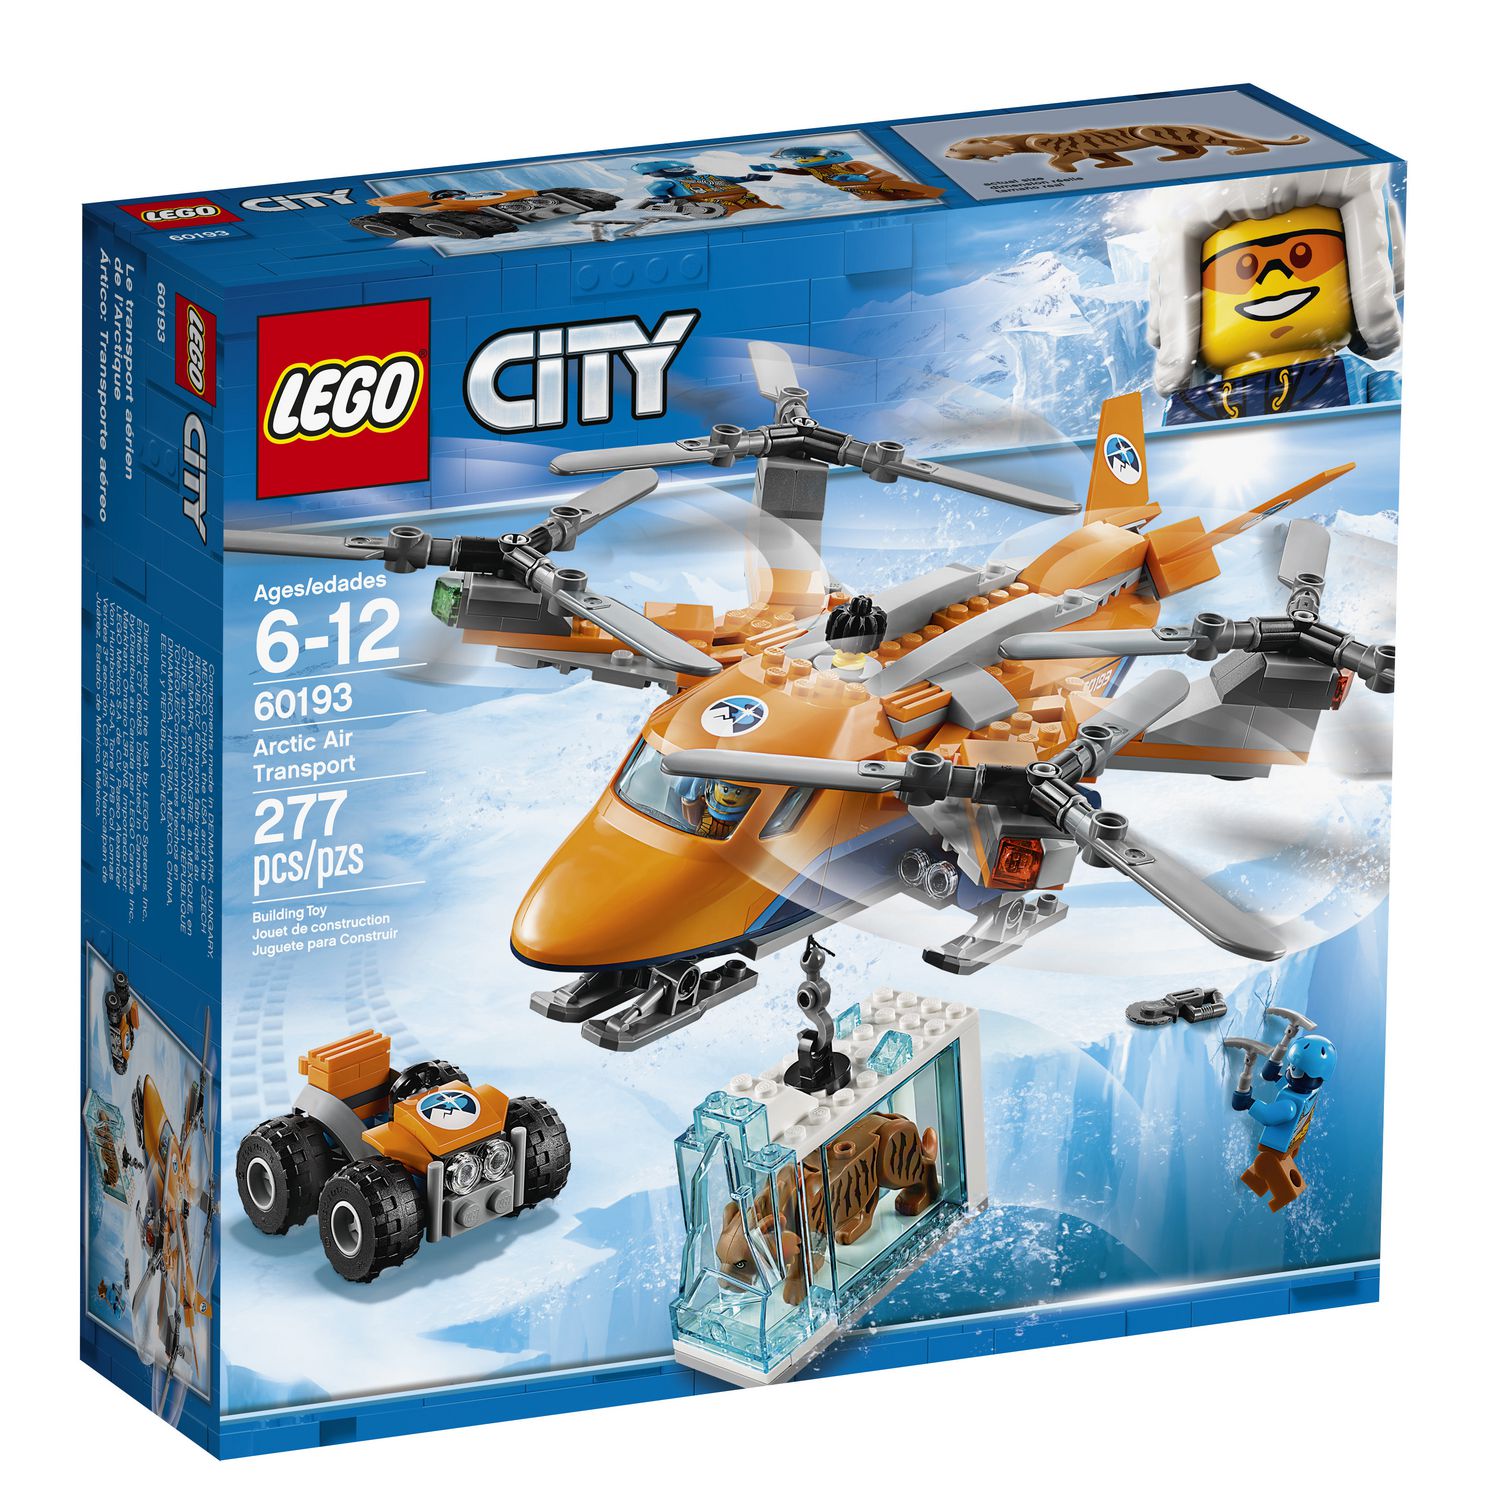 LEGO City Arctic Air Transport 60193 Building Kit (277 Piece